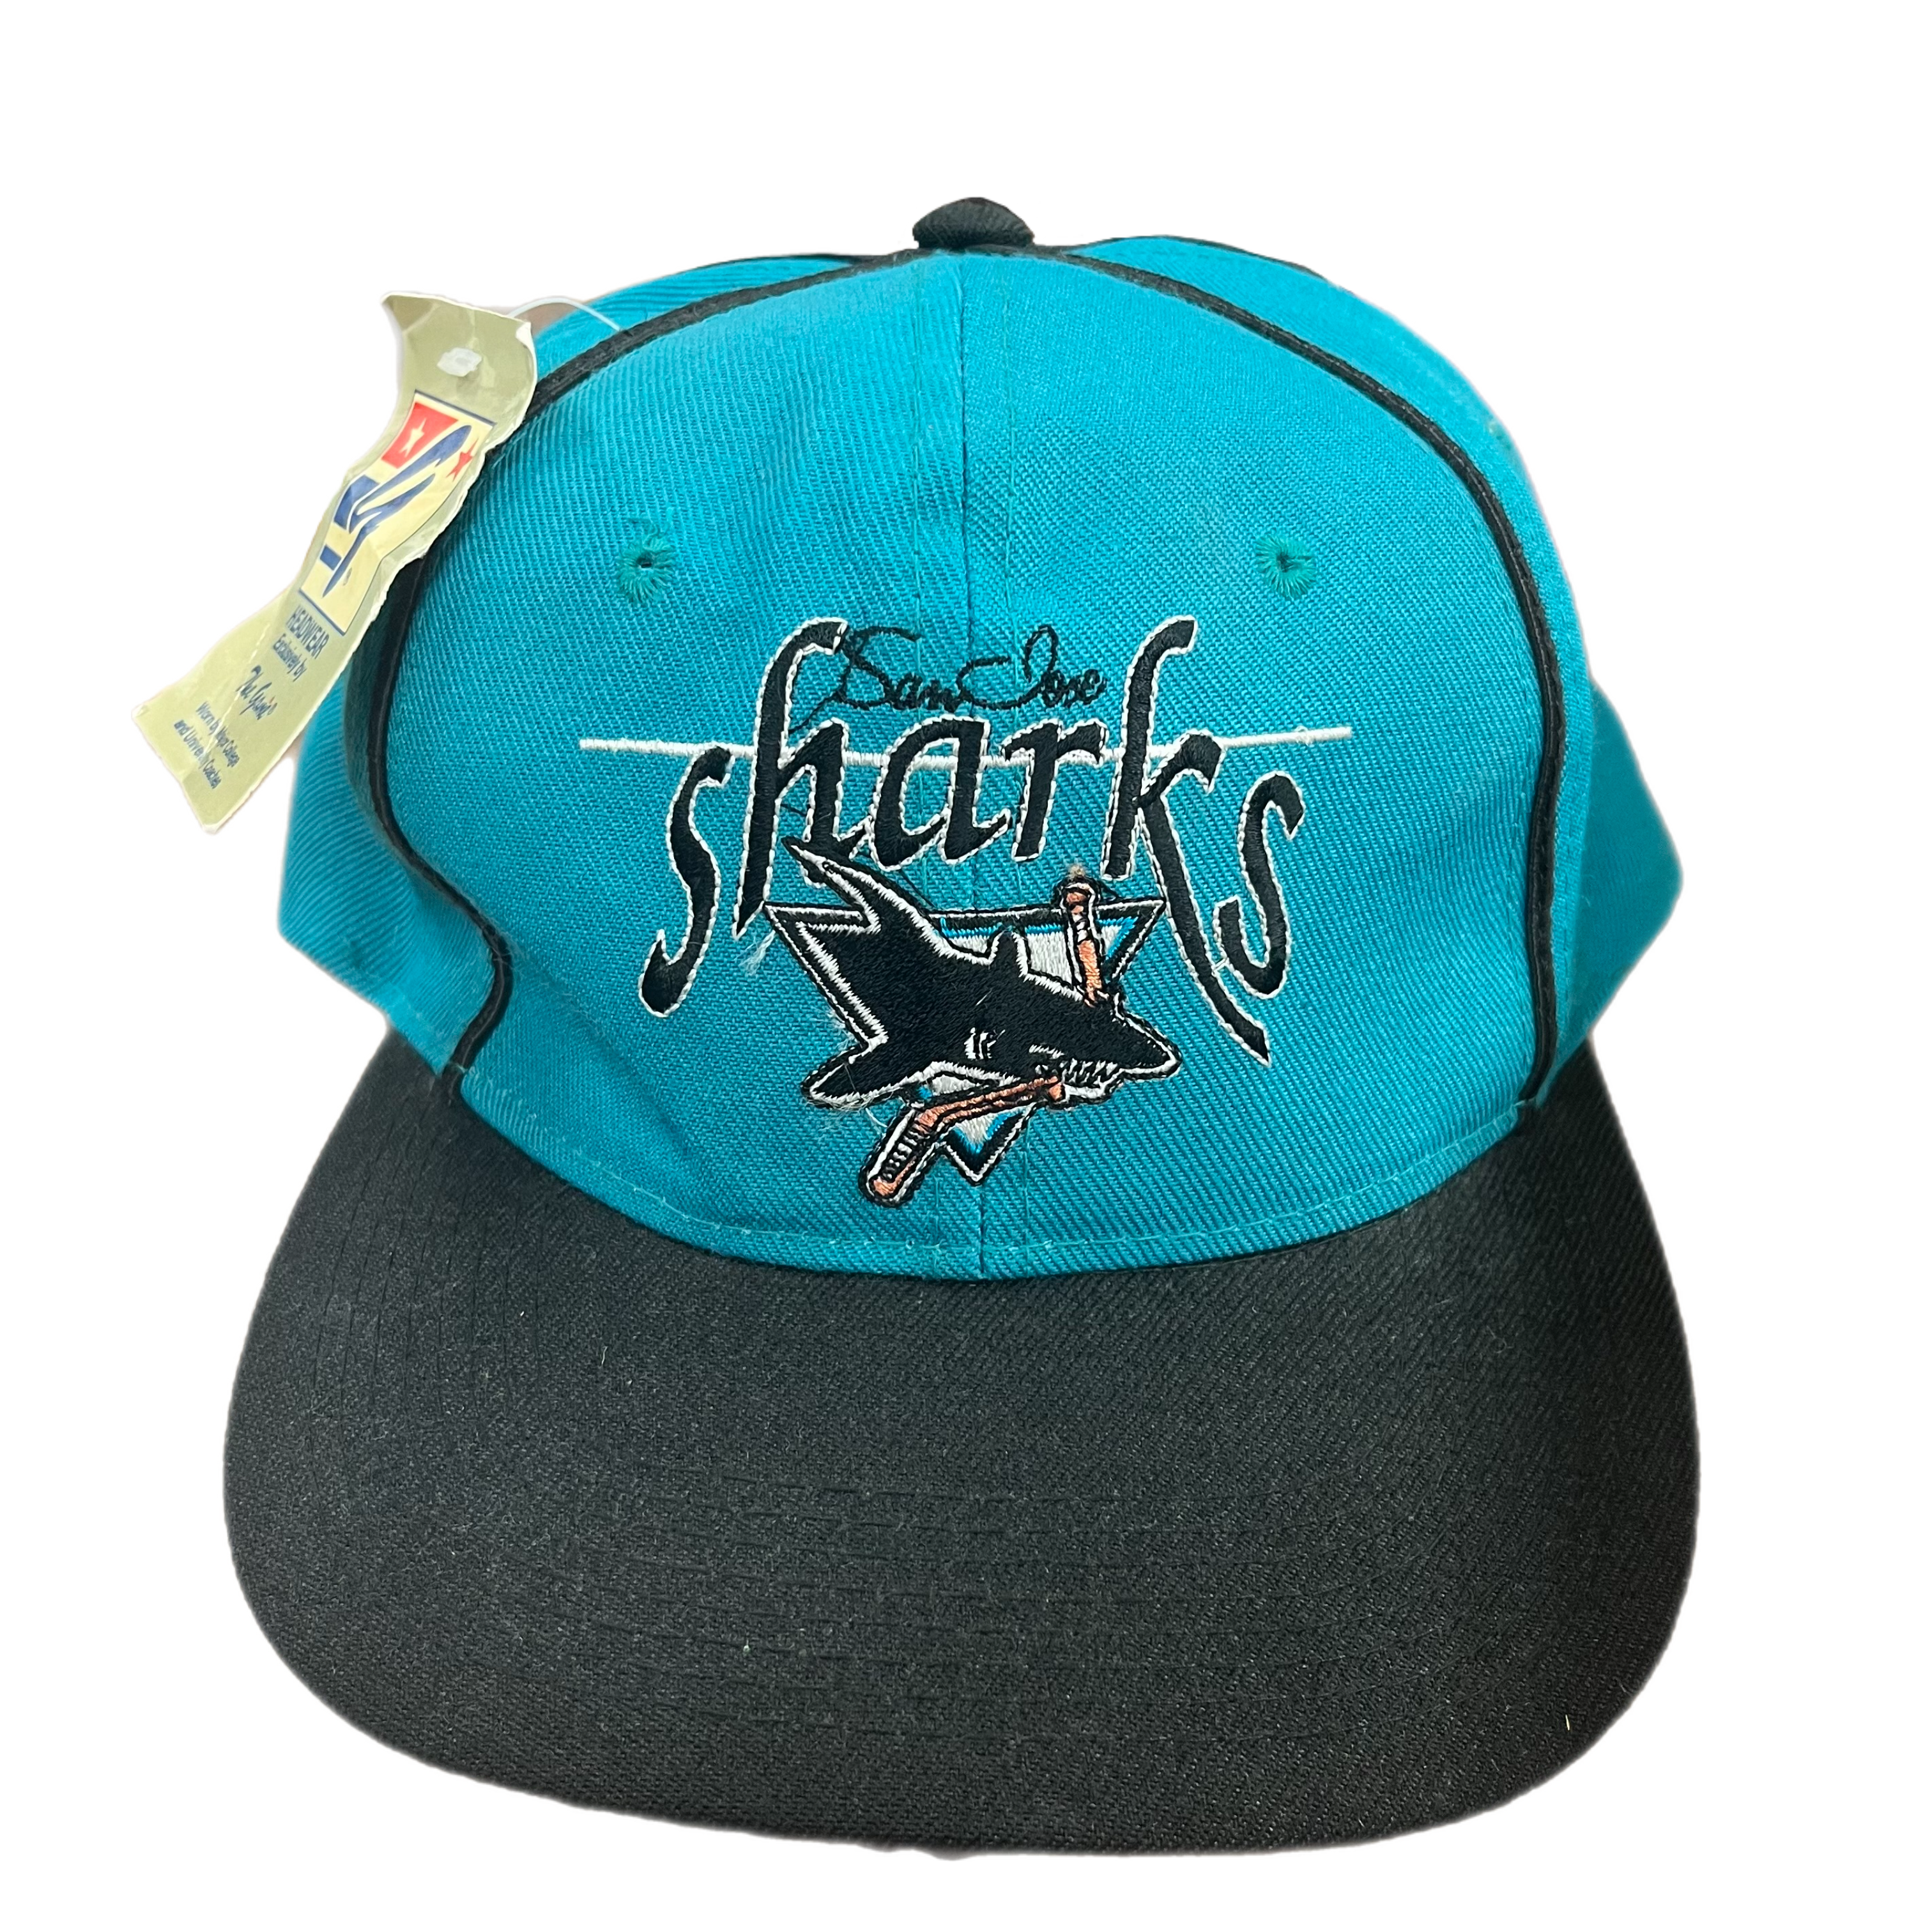 San Jose Sharks Vintage